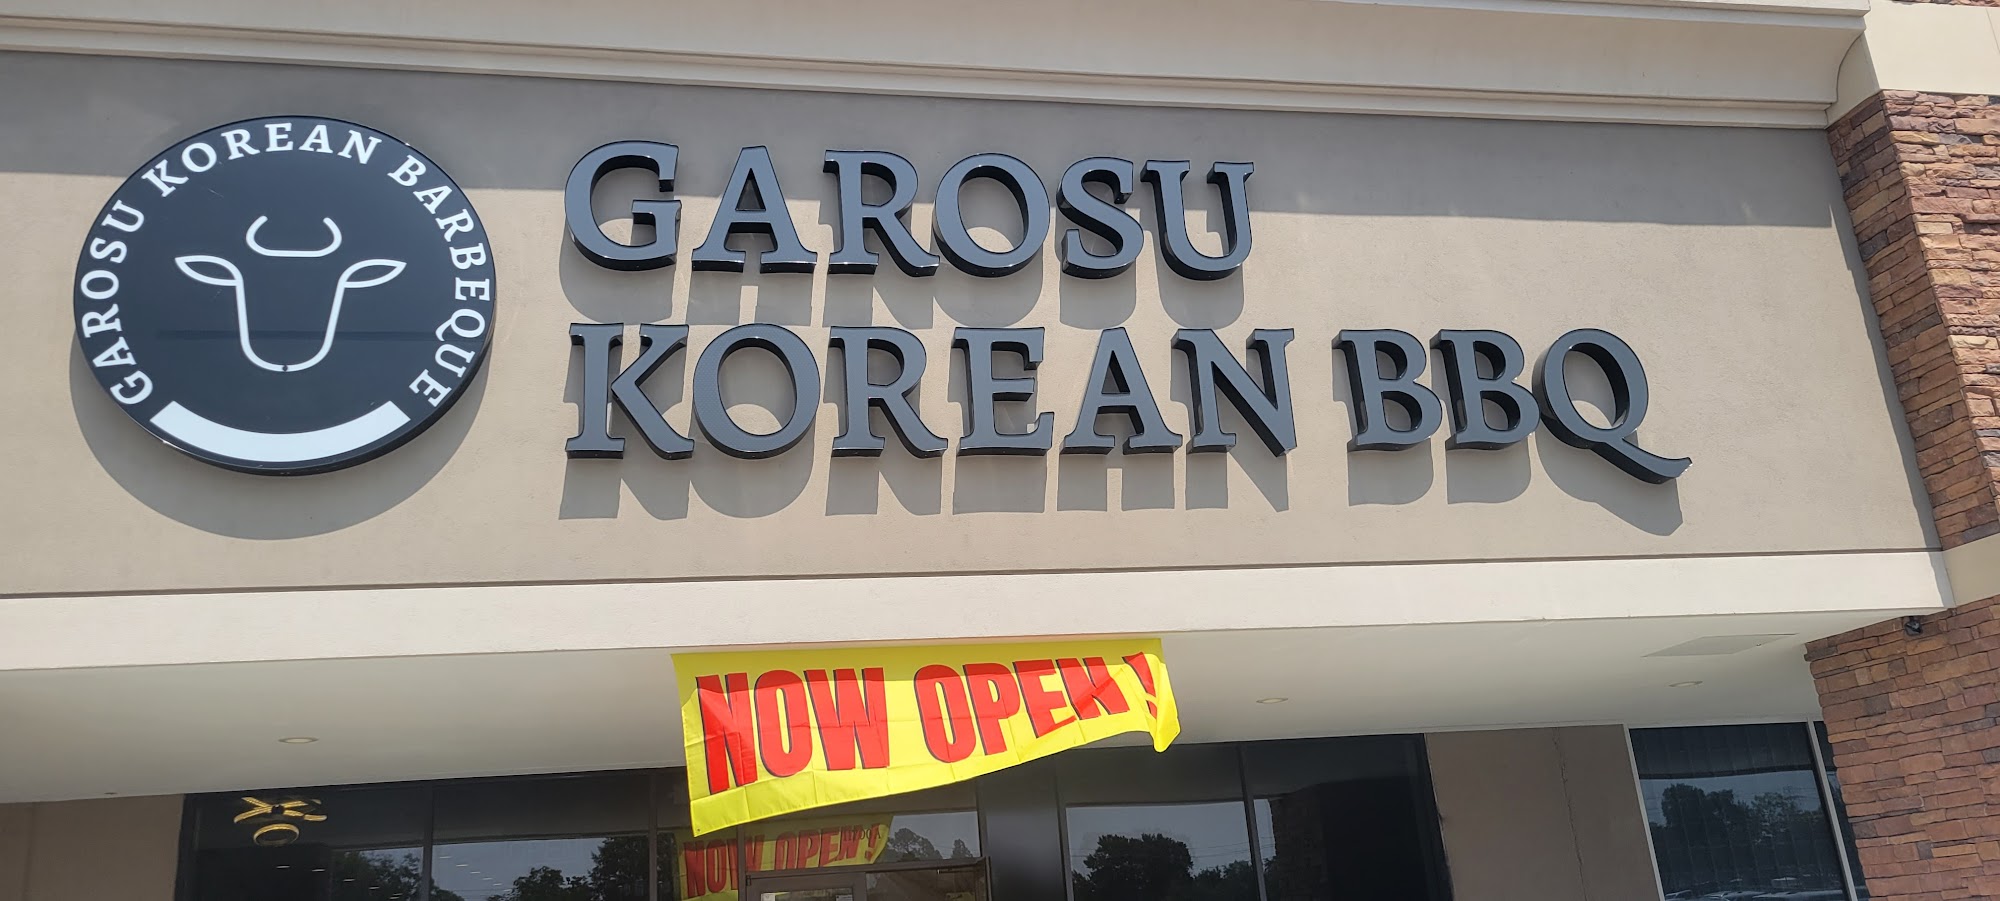 Garosu Korean BBQ